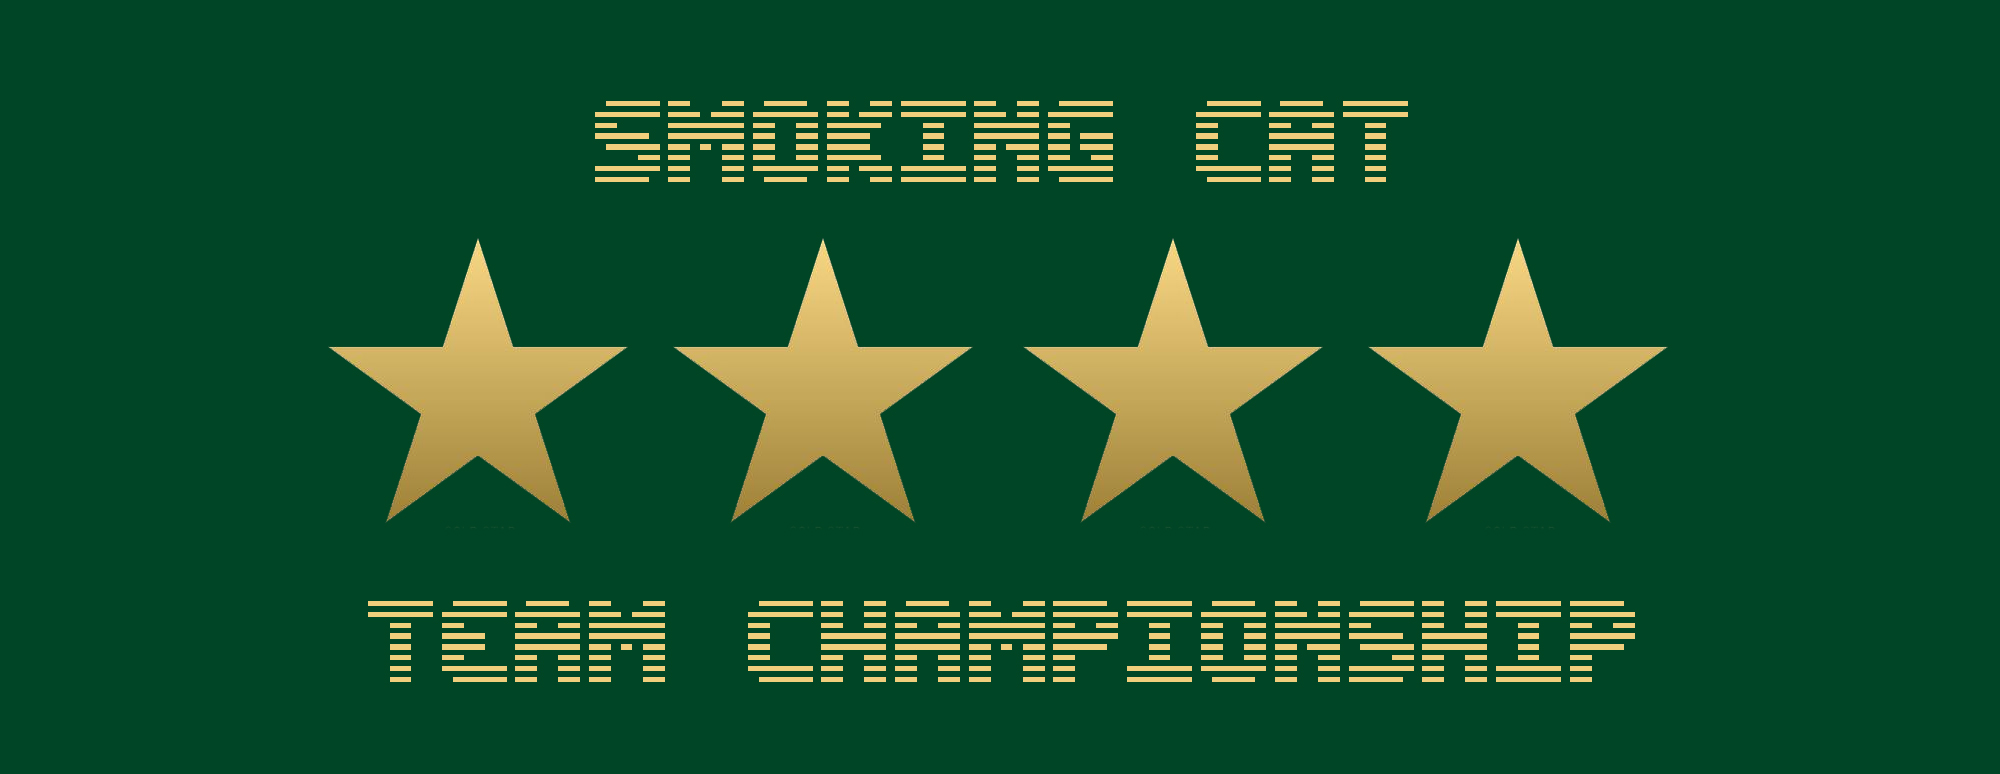 Smoking Cat Team Championship 2021 (Clubs Major)